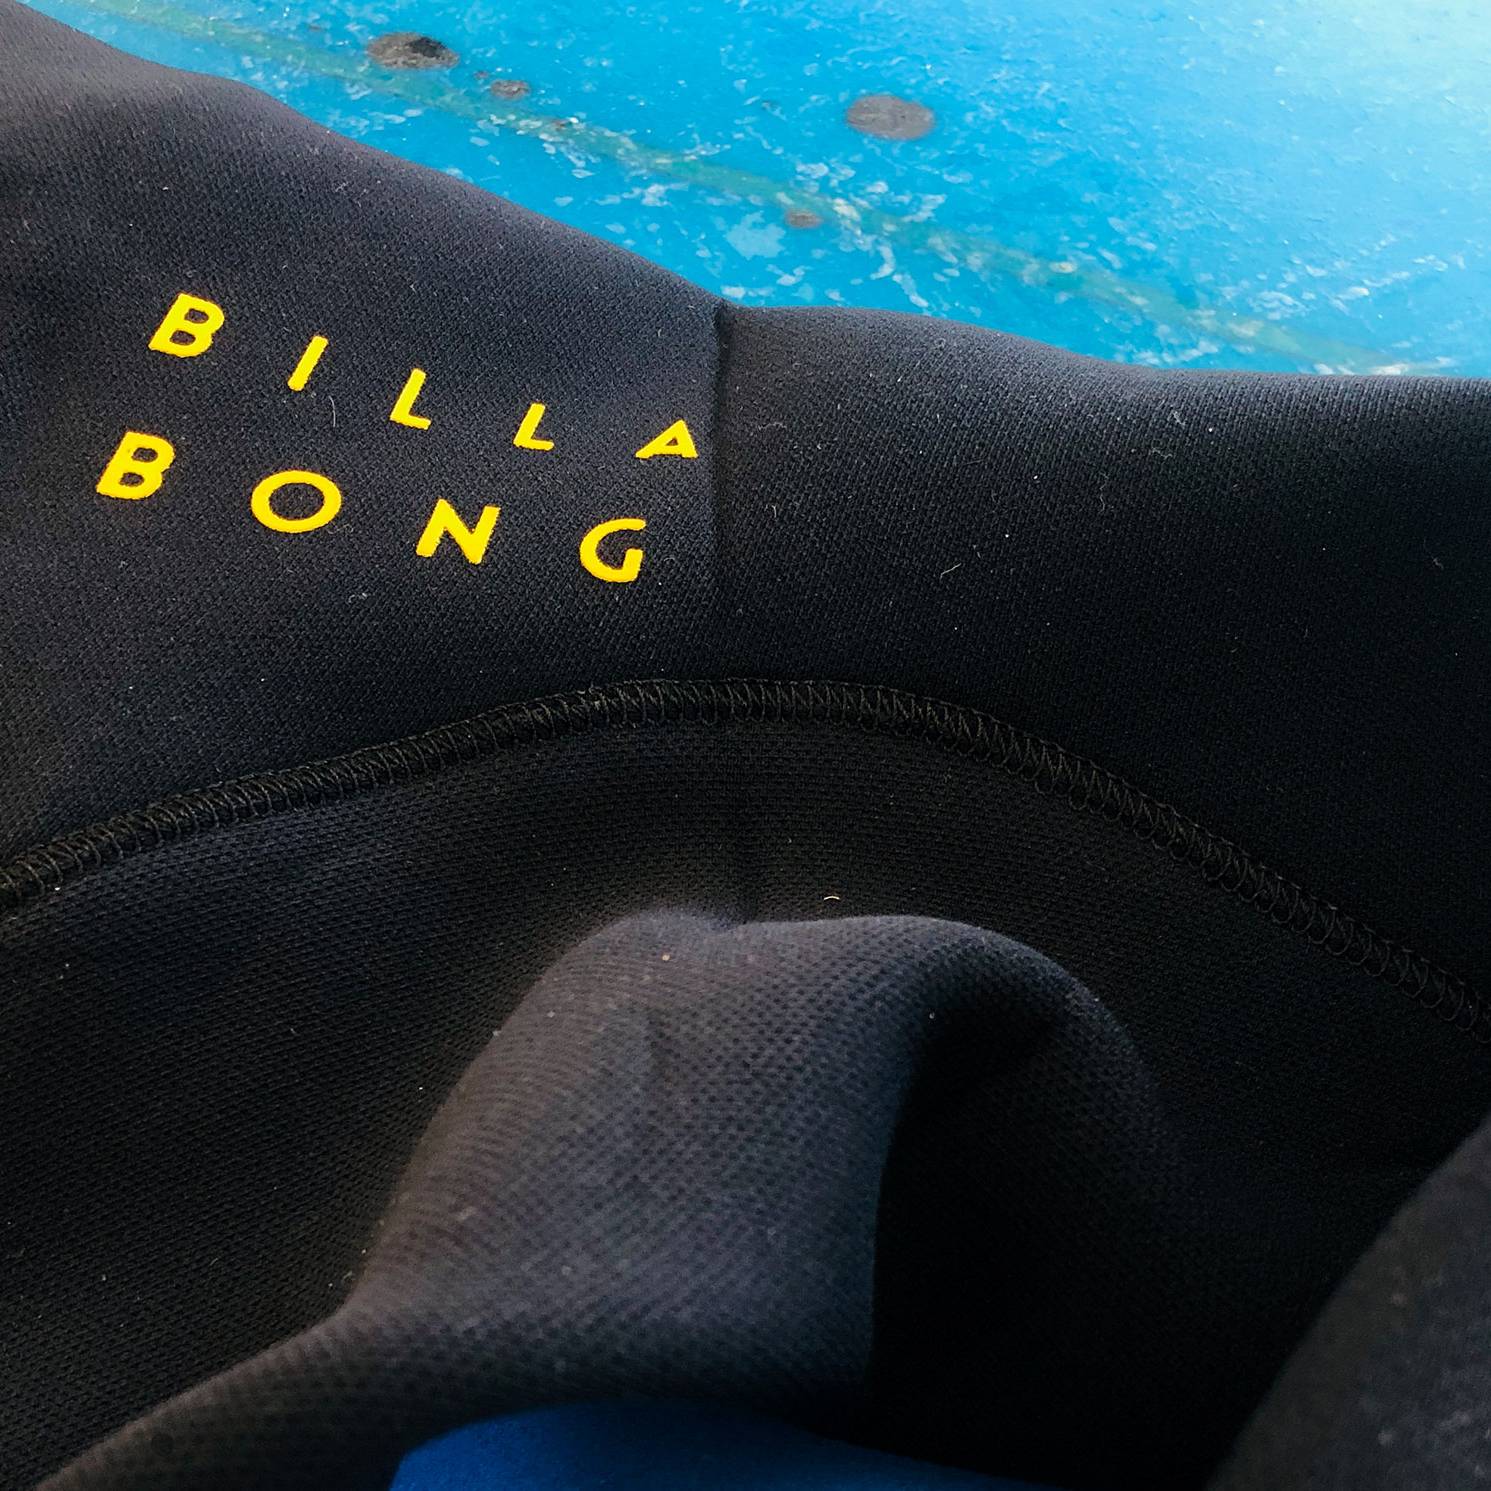 Billabong Pro Series Wetsuit Review